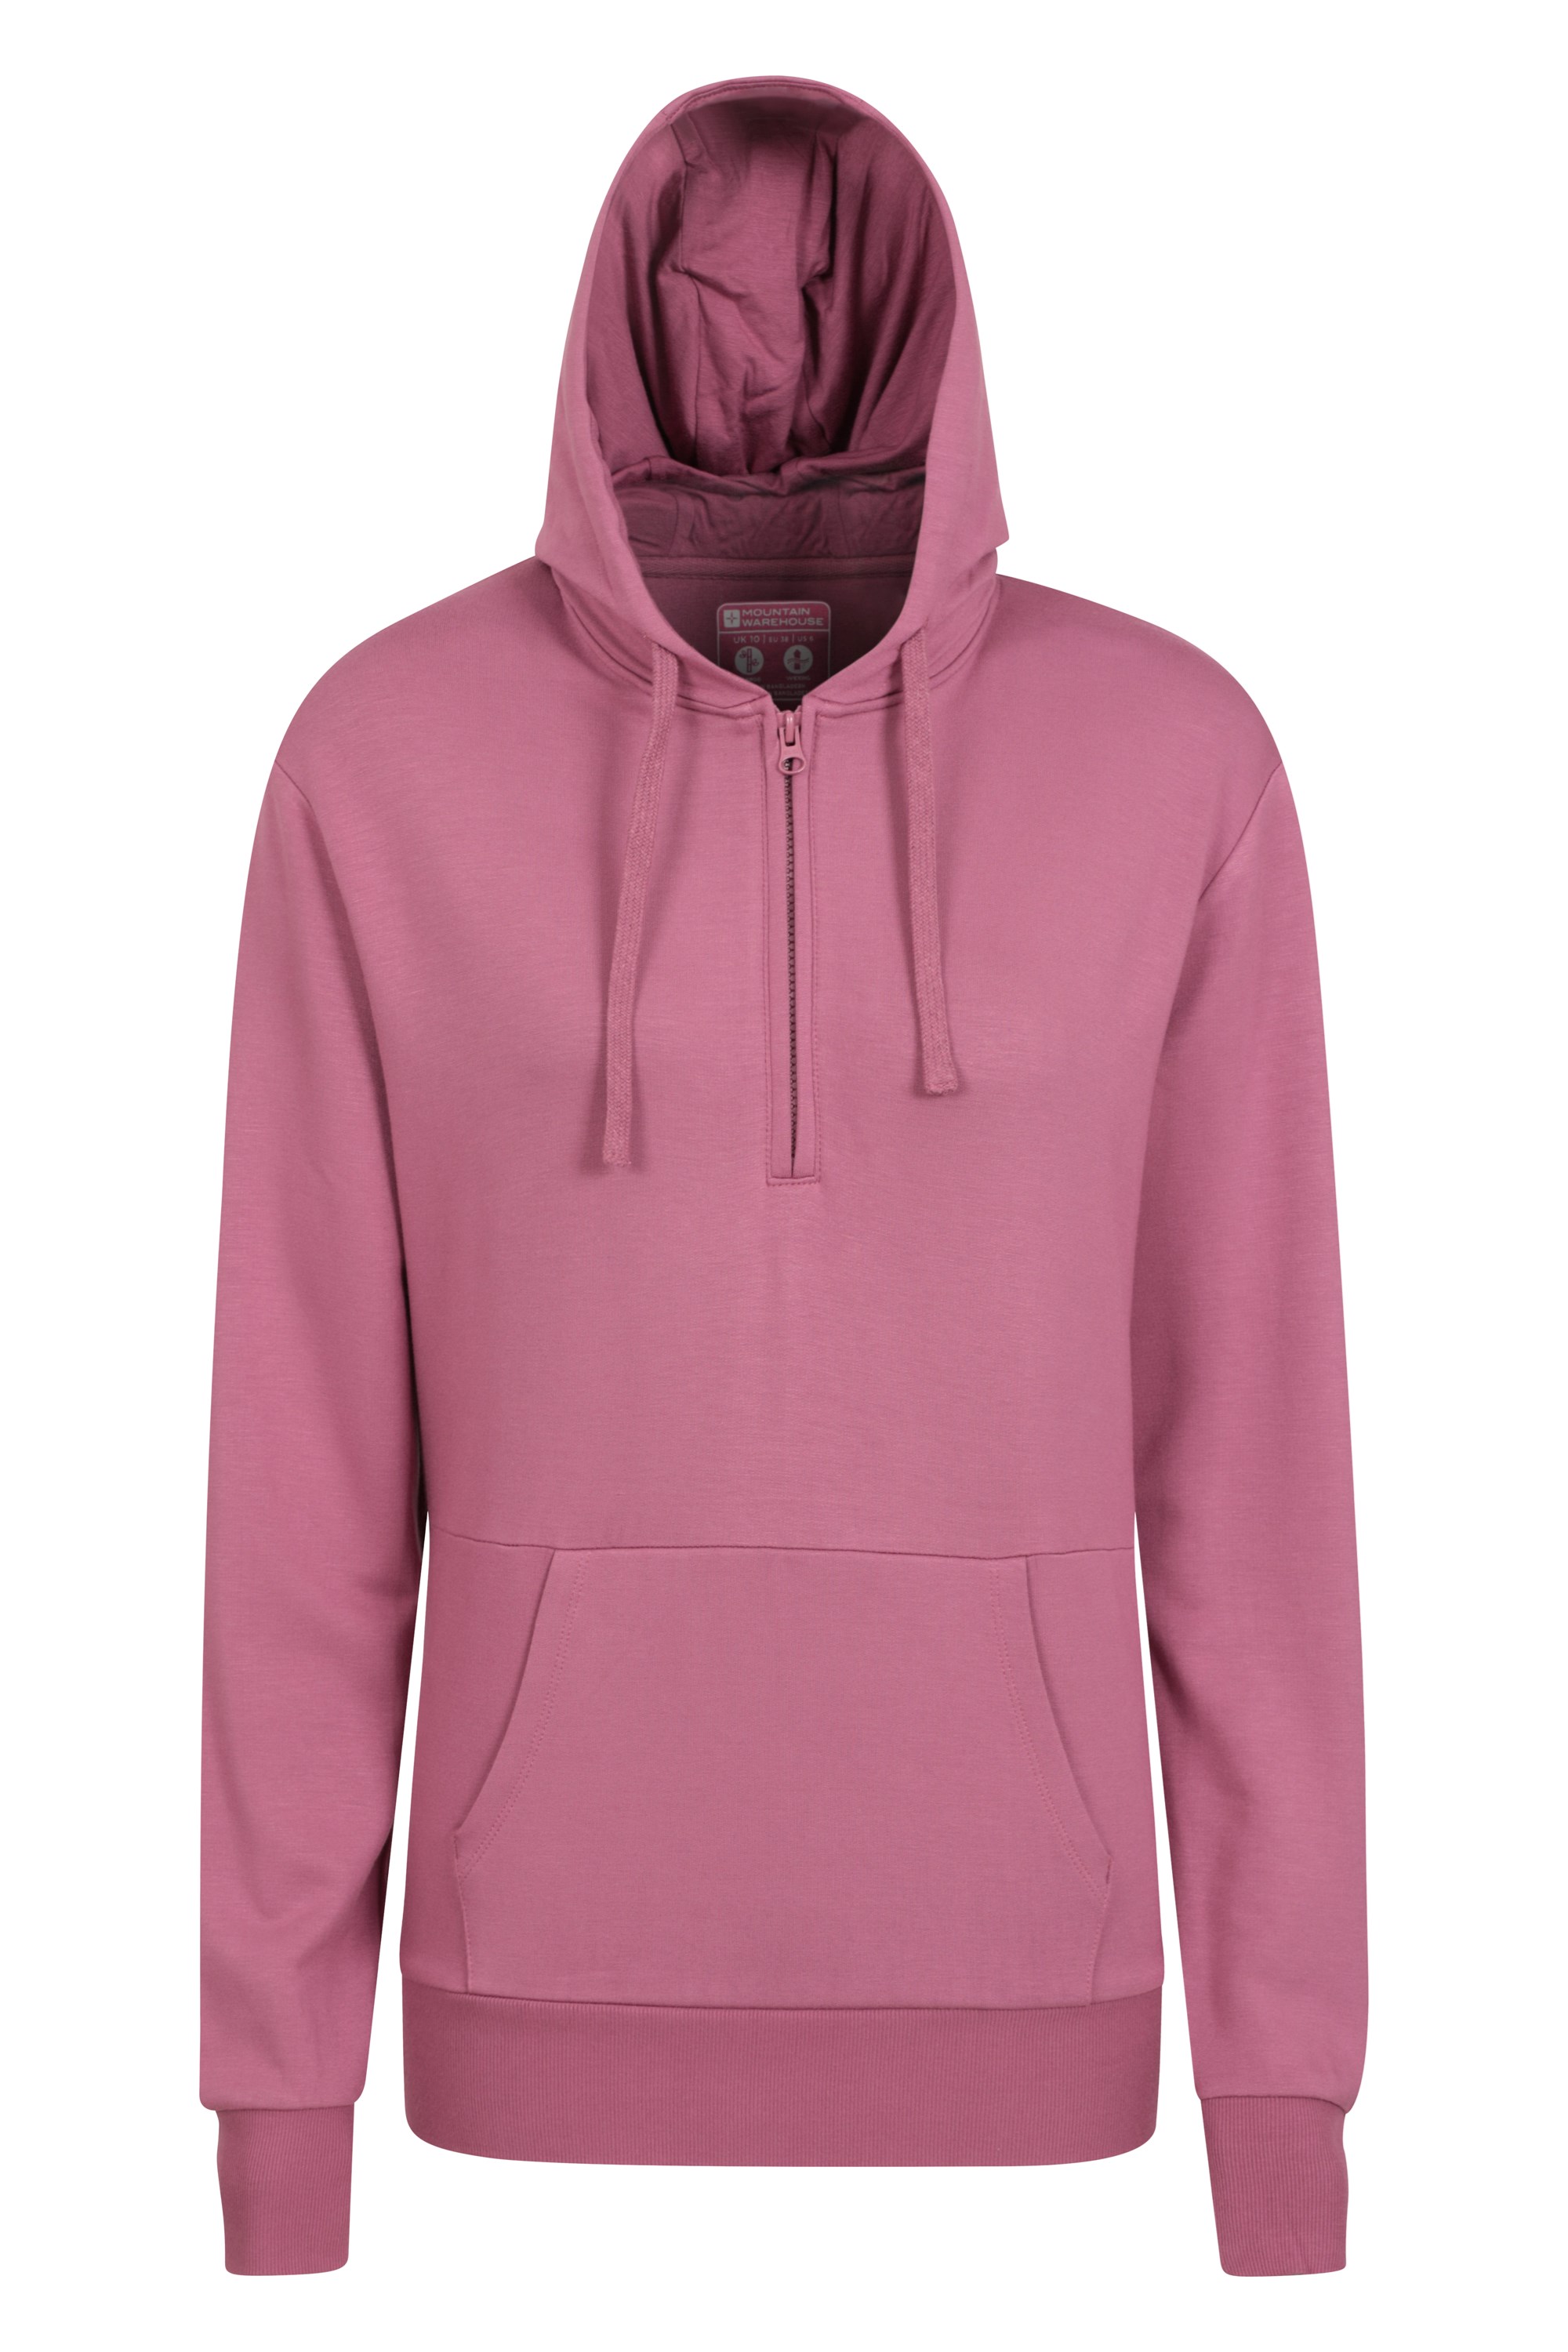 Mountain Warehouse Mountain Warehouse pink yoga quilted midlayer sweatshirt jumper size 12 